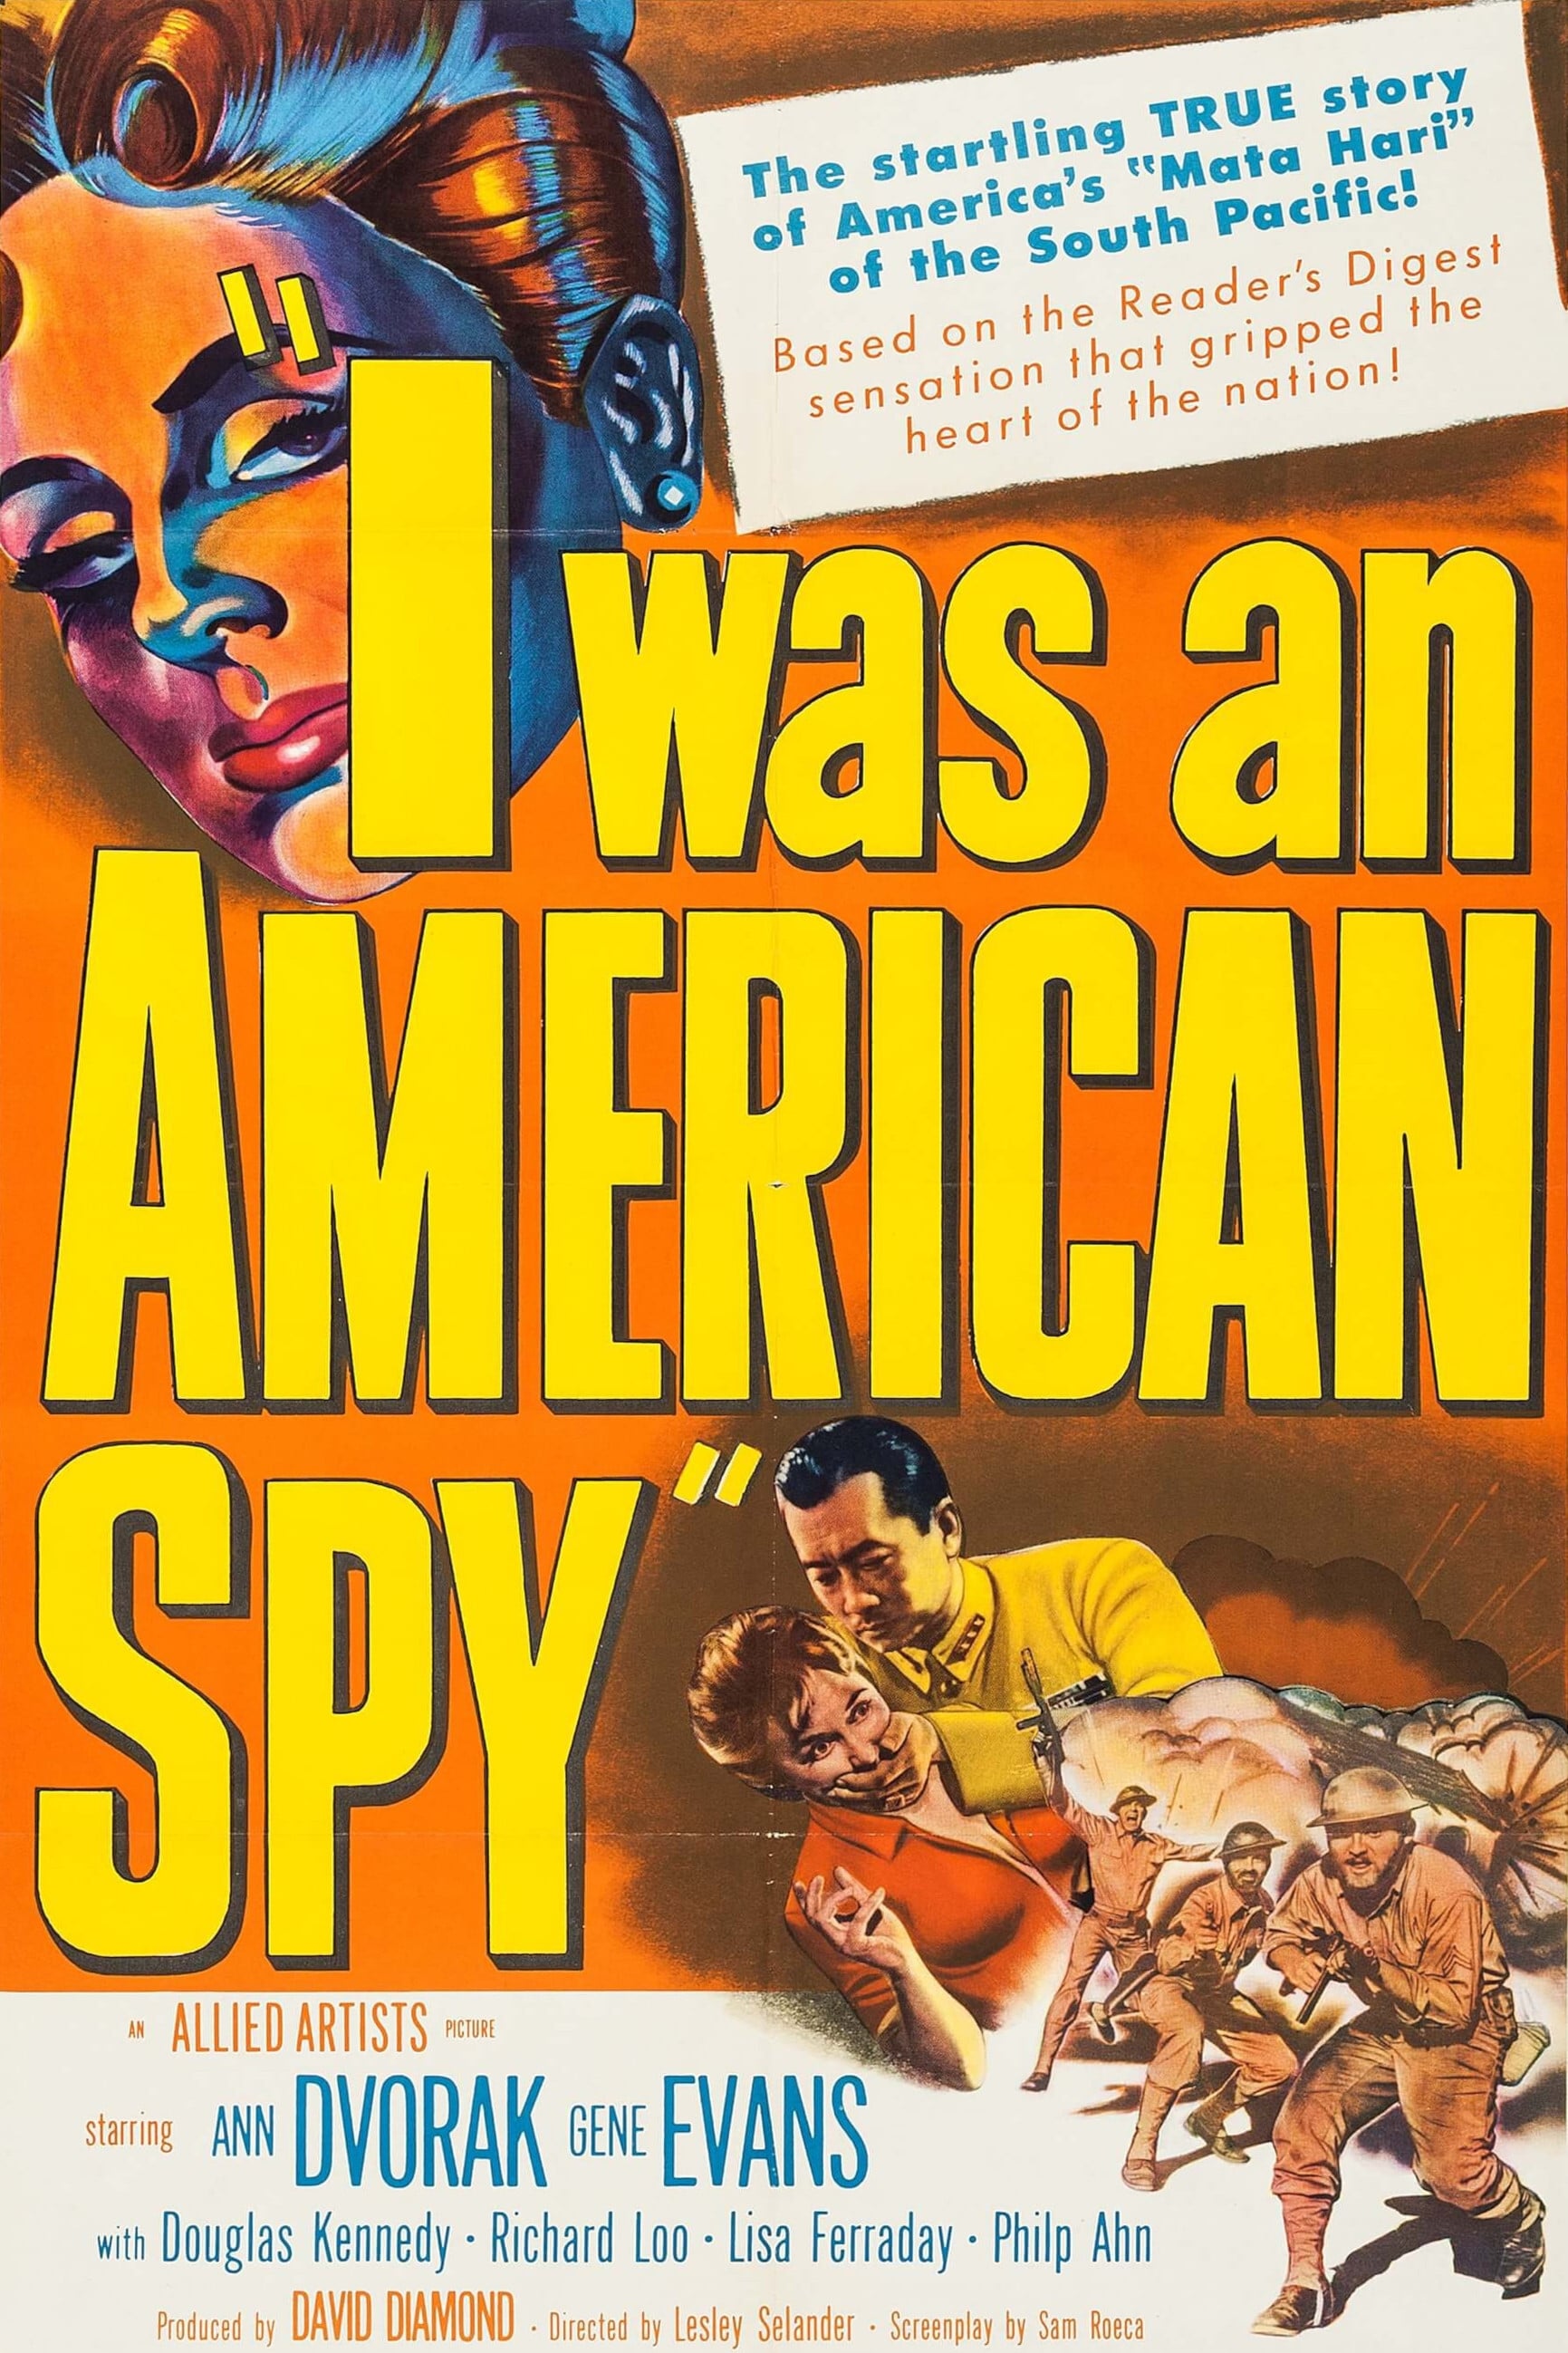 I Was an American Spy